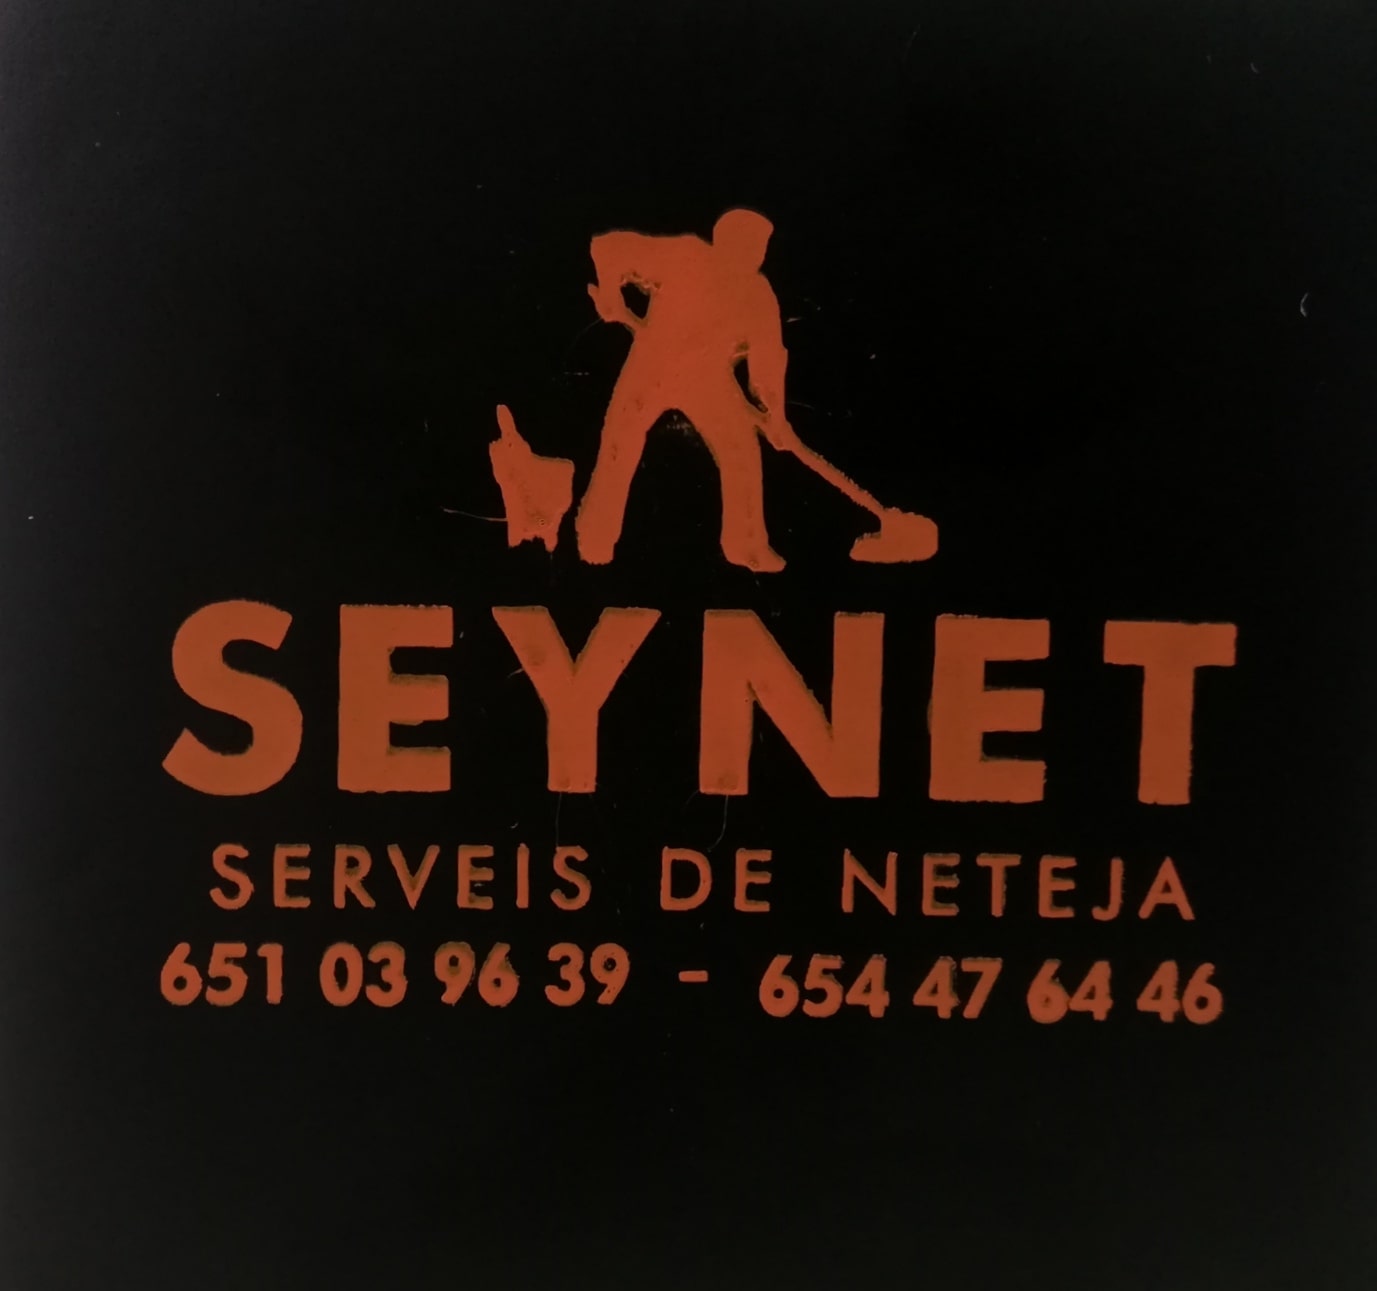 Seynet logo antiguo